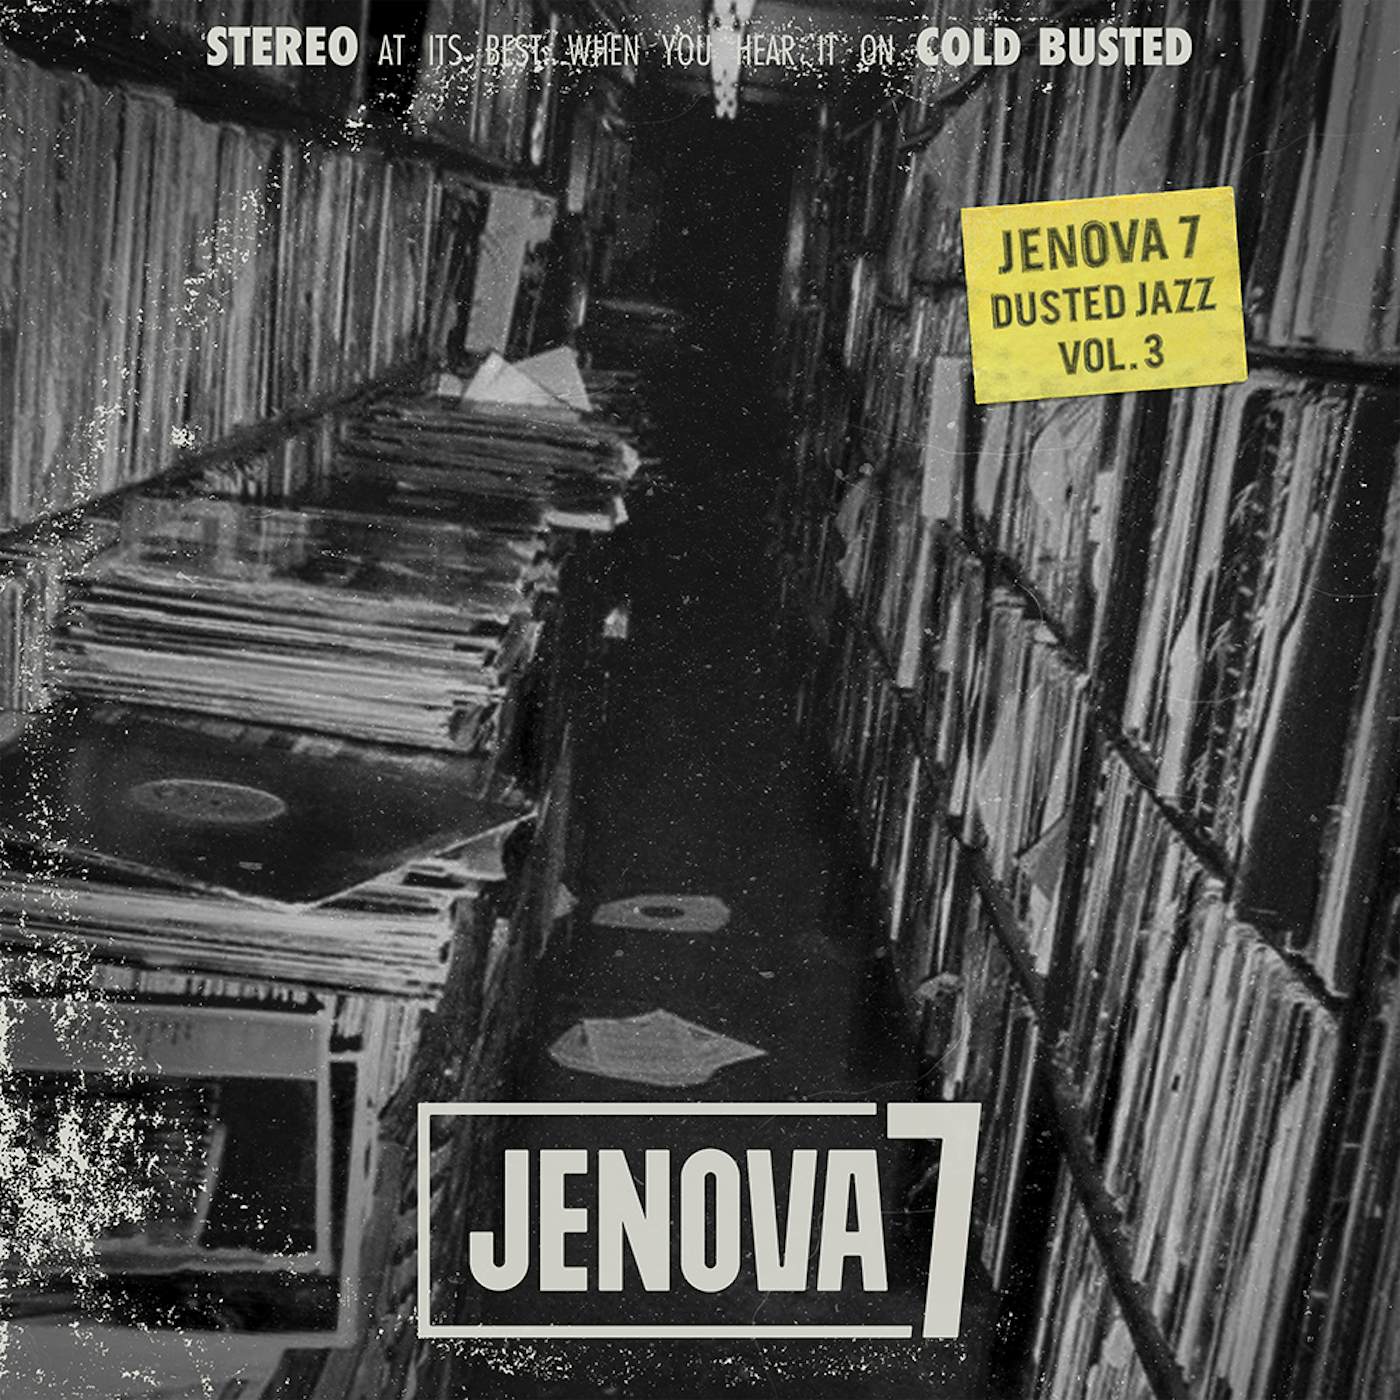 Jenova 7 Dusted Jazz Vol. 3 Vinyl Record